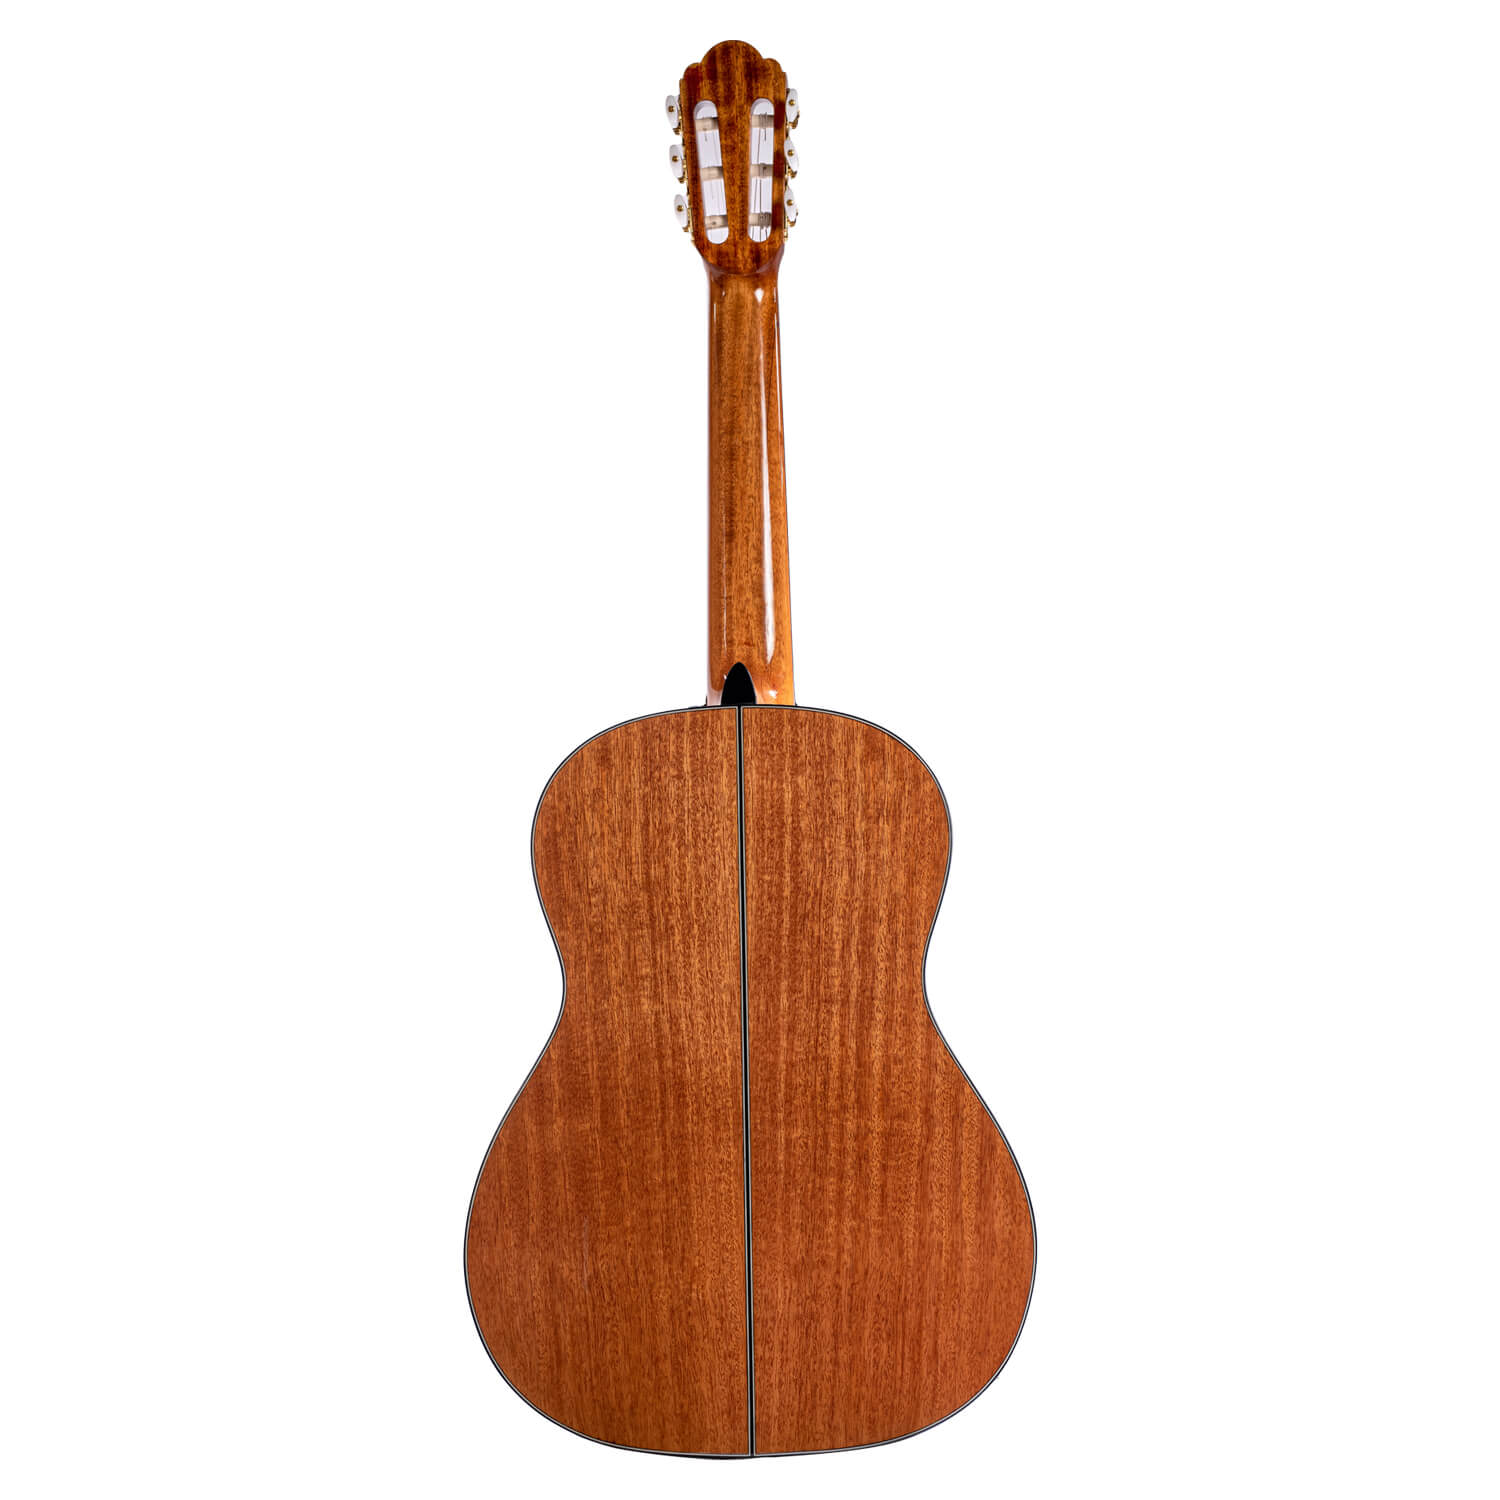 Avila AC-510 Classical Guitar: A Popular Choice for Beginners and , Children